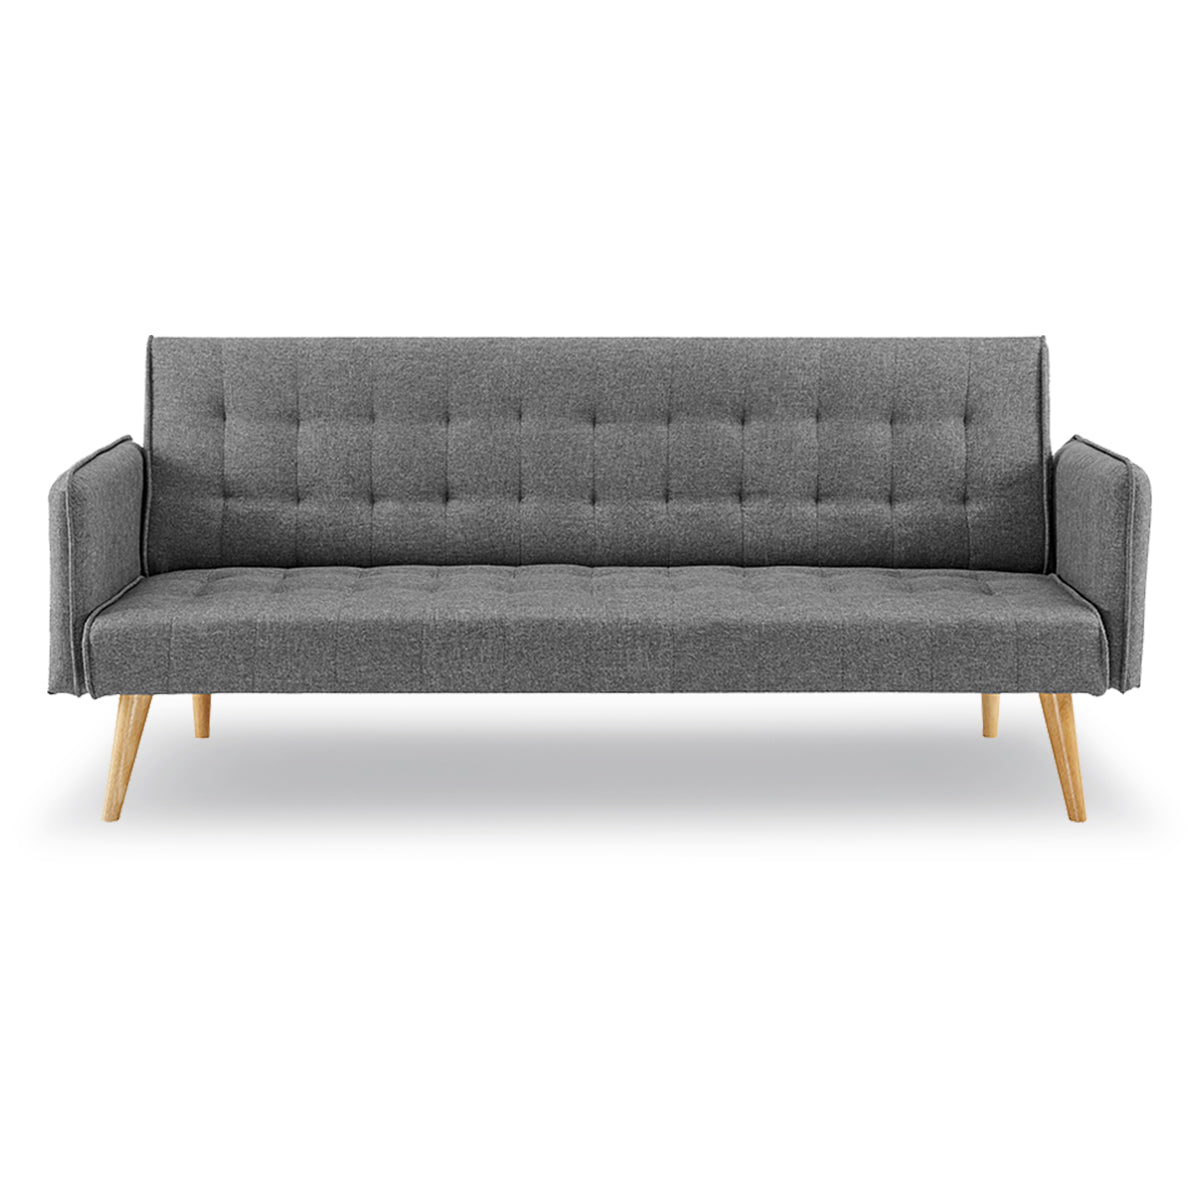 Sarantino 3 Seater Modular Linen Fabric Sofa Bed Couch Armrest Grey - 0